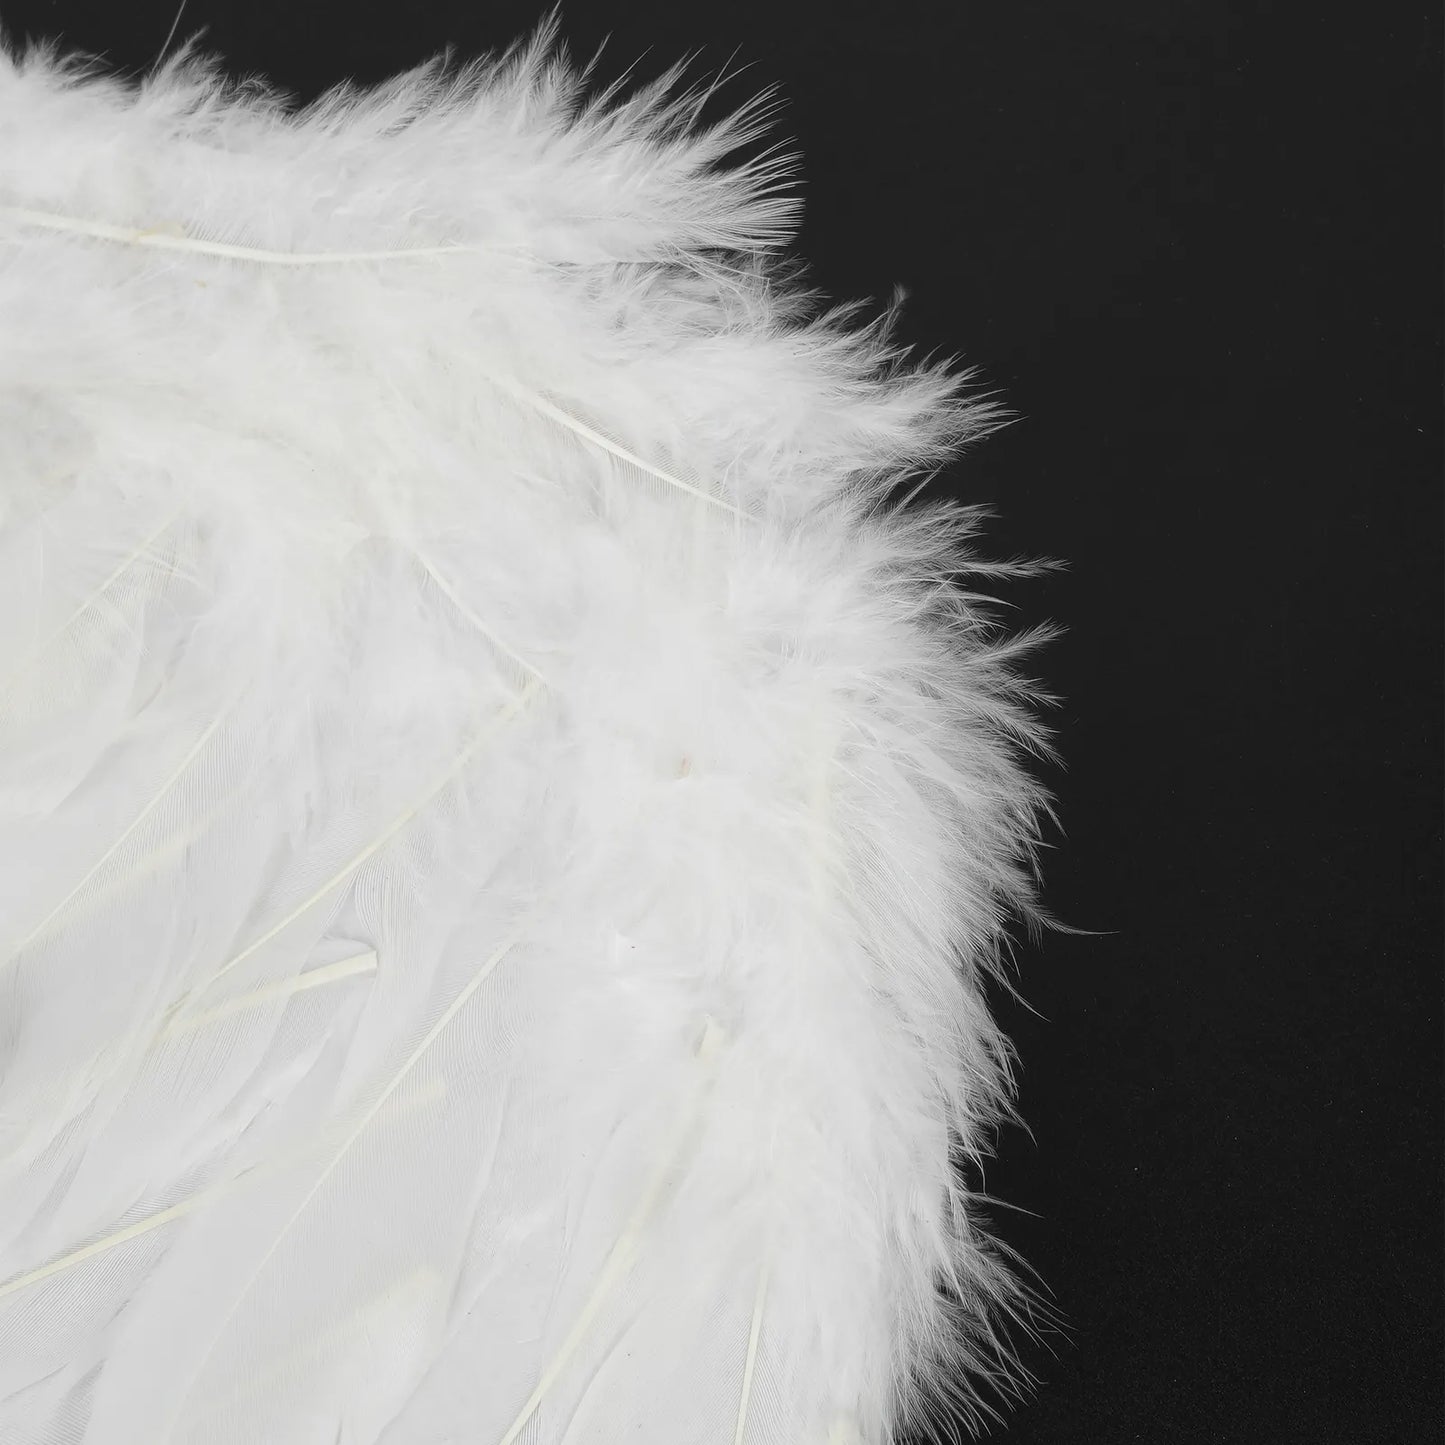 Angel Wings - Dancewear by Patricia